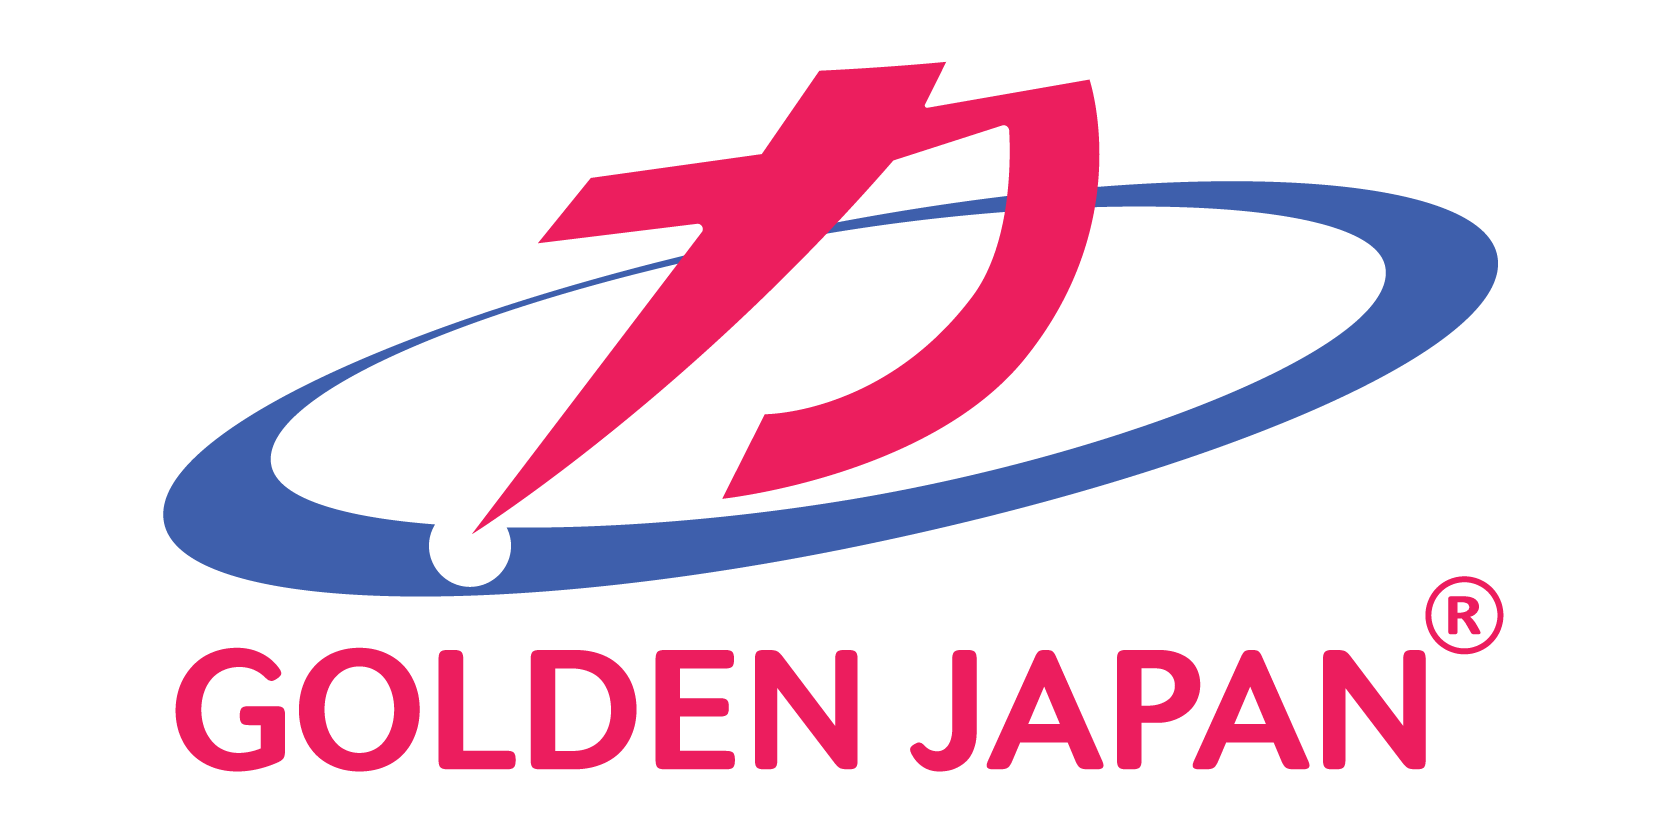 LOGO GOLDEN JAPAN FUJI